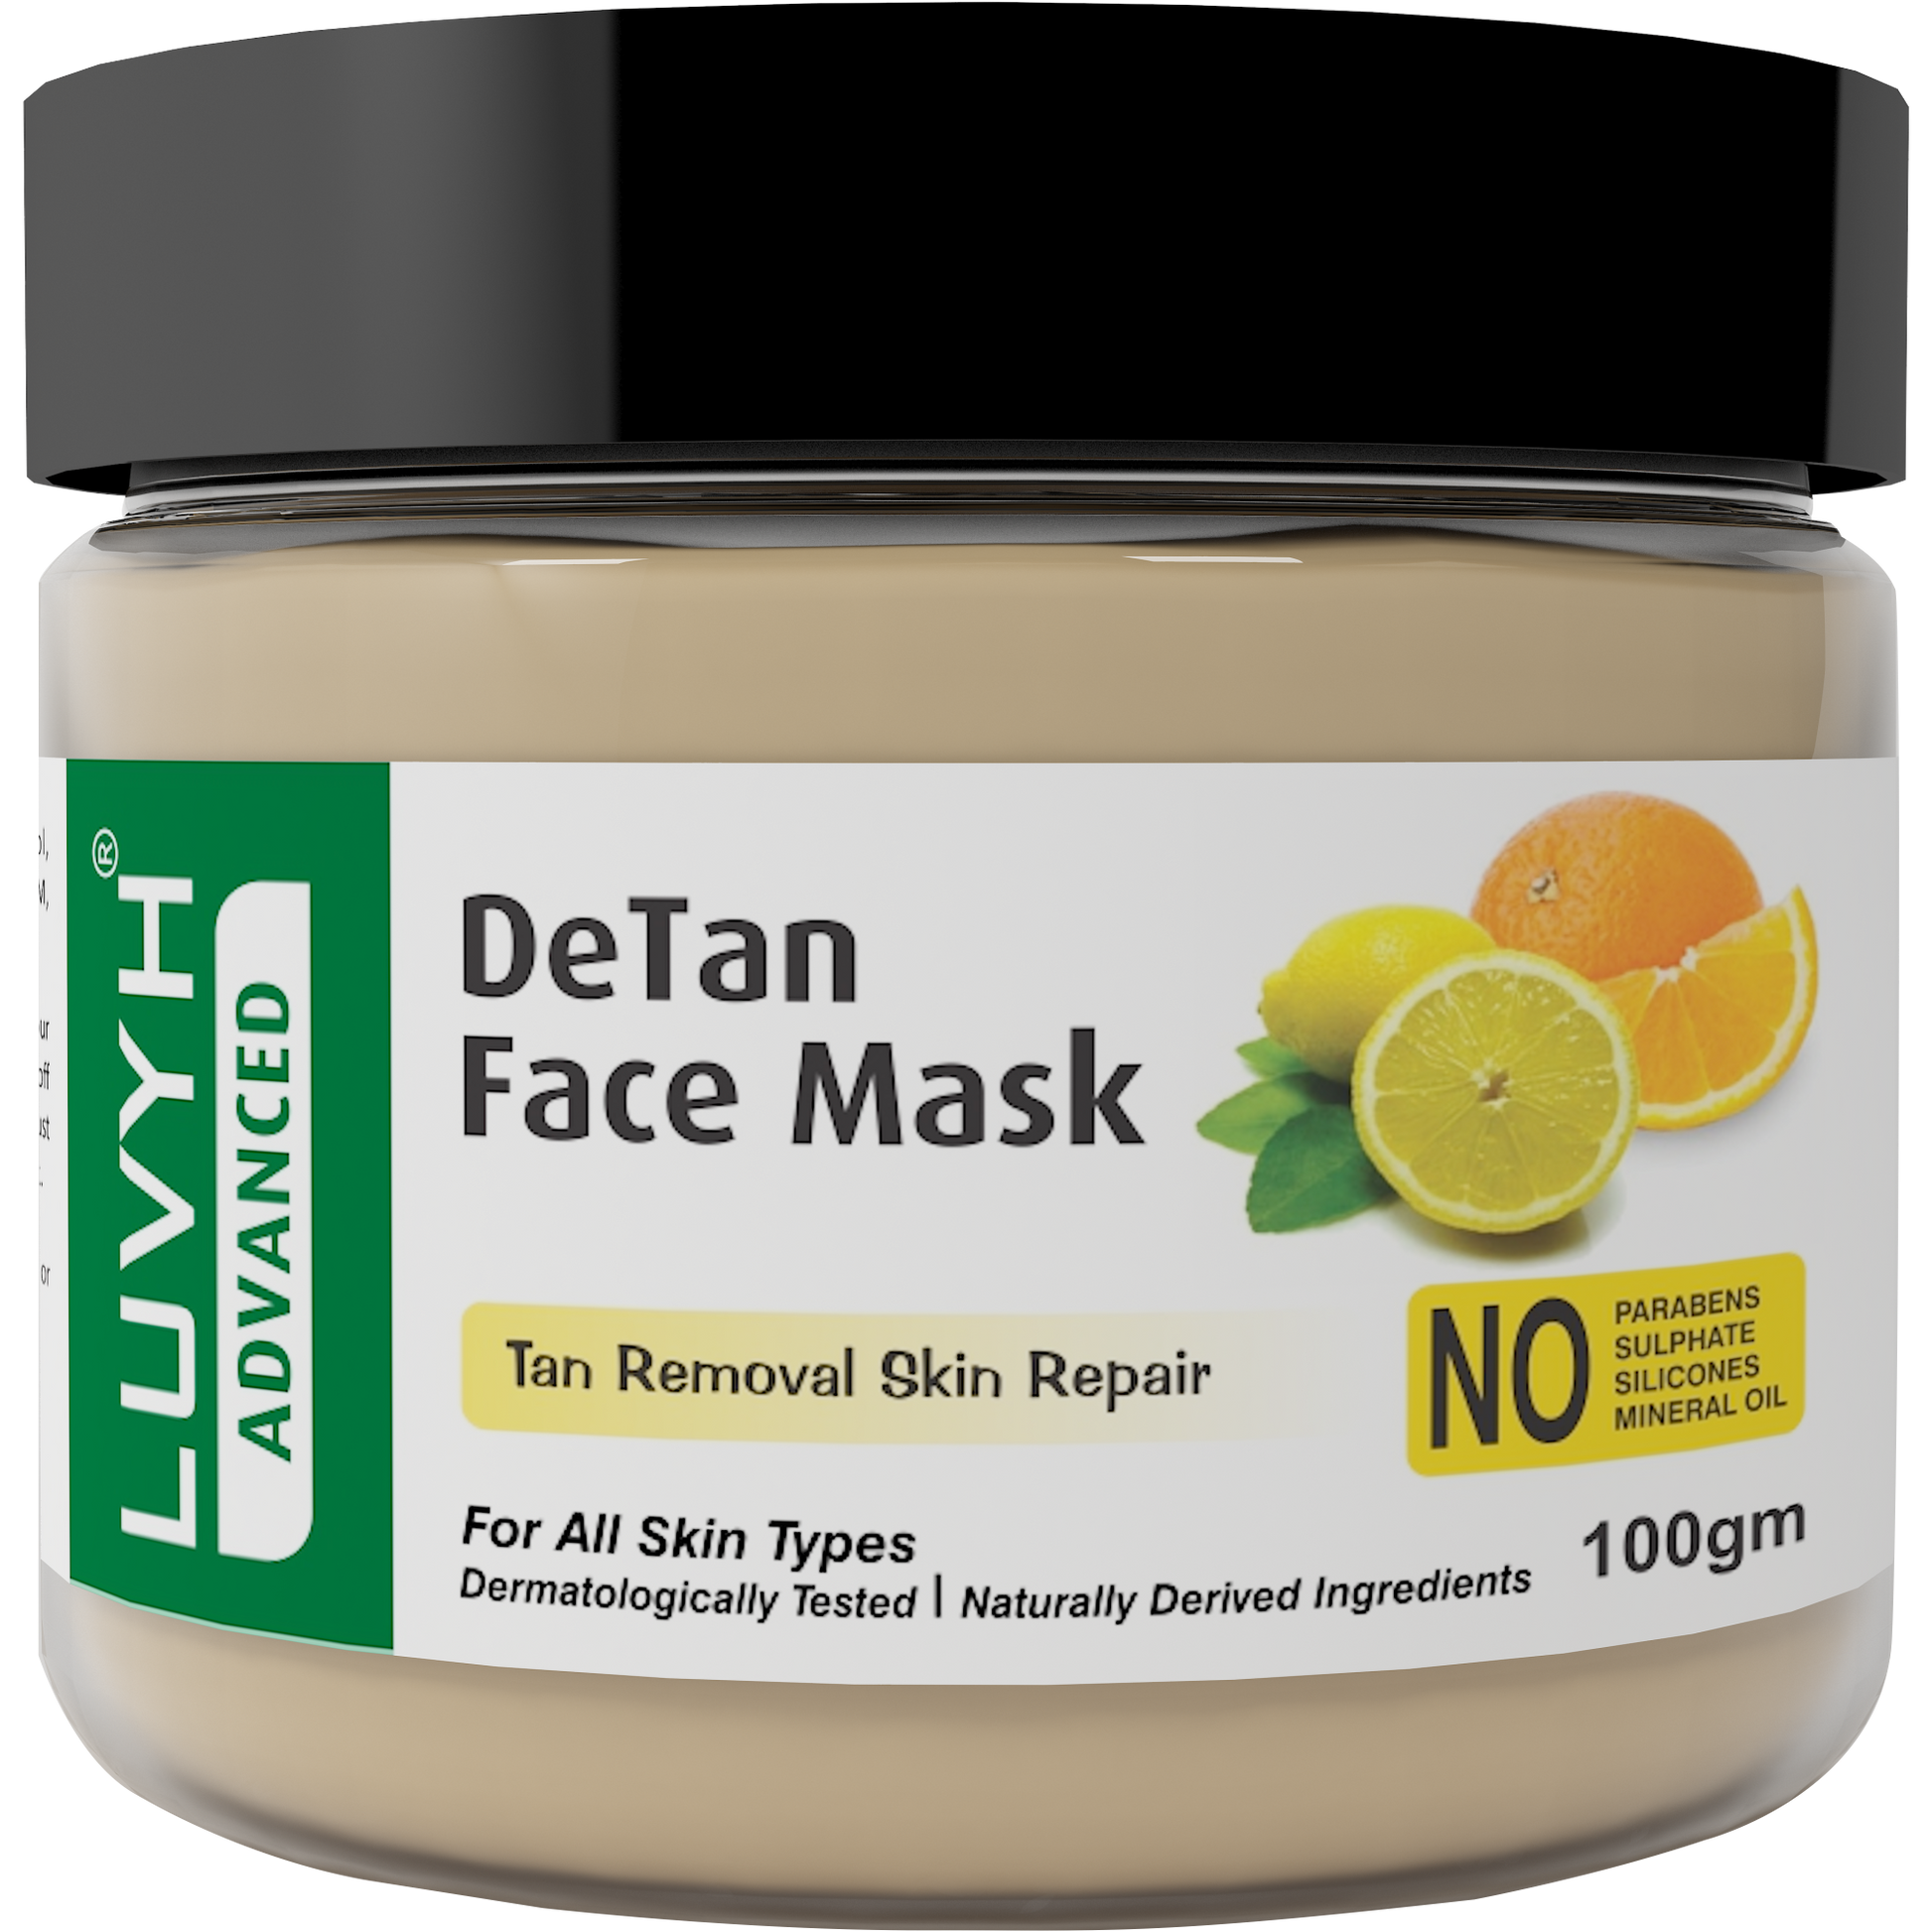 DeTan Face Mask - Best for Tan Removal